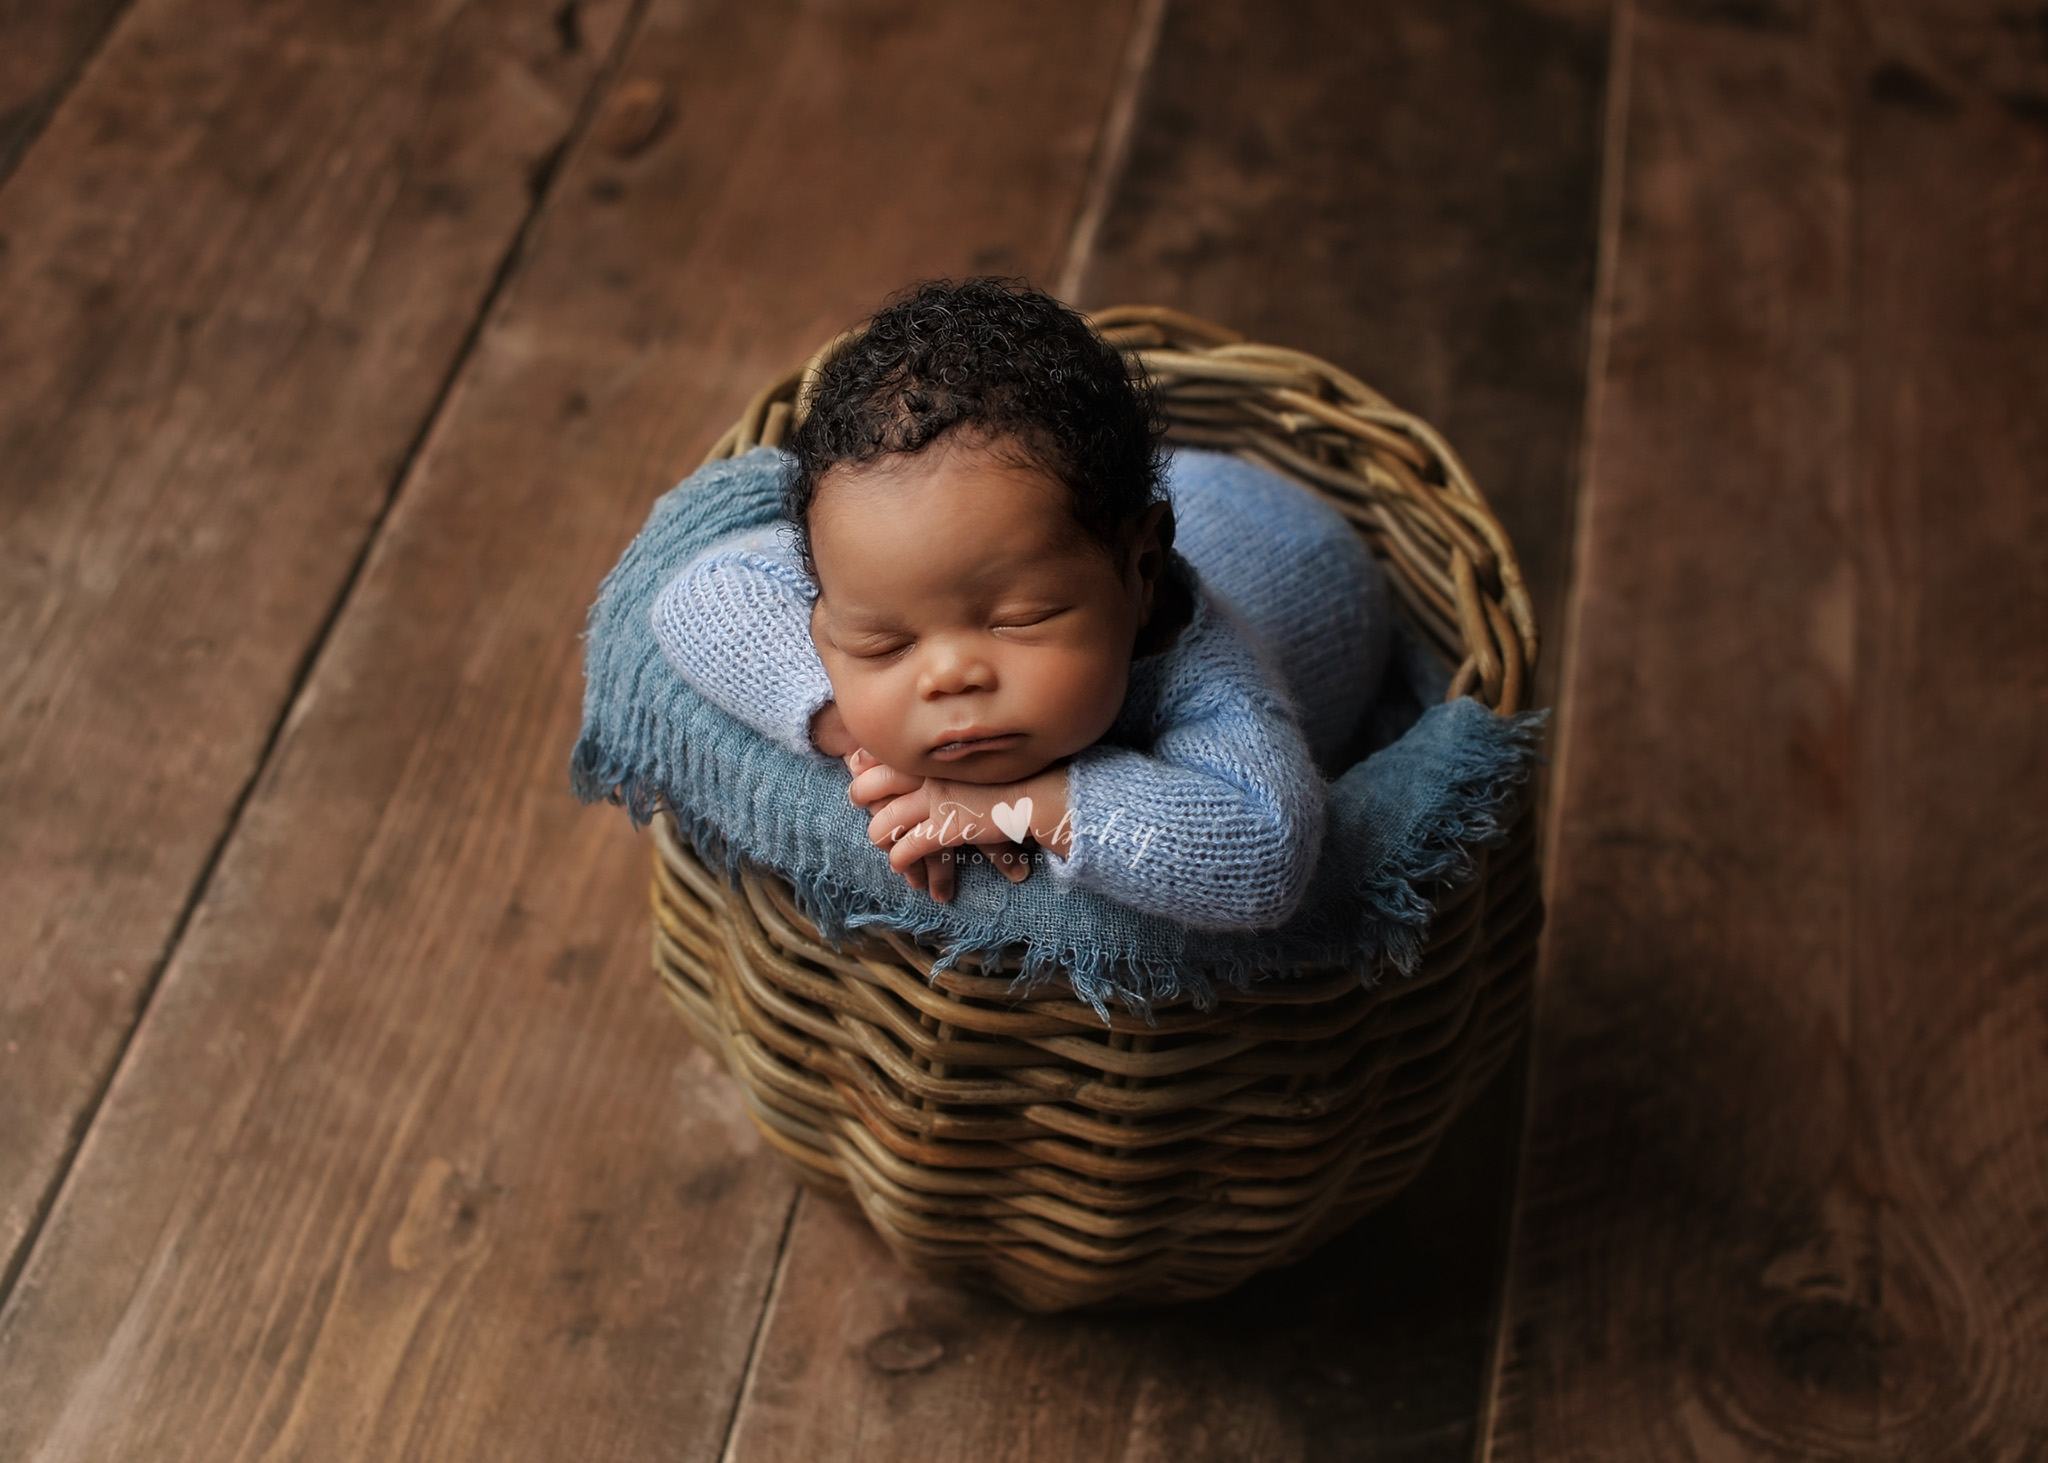 newborn photography manchester, baby portrait manchester, cute baby photography, newborn session